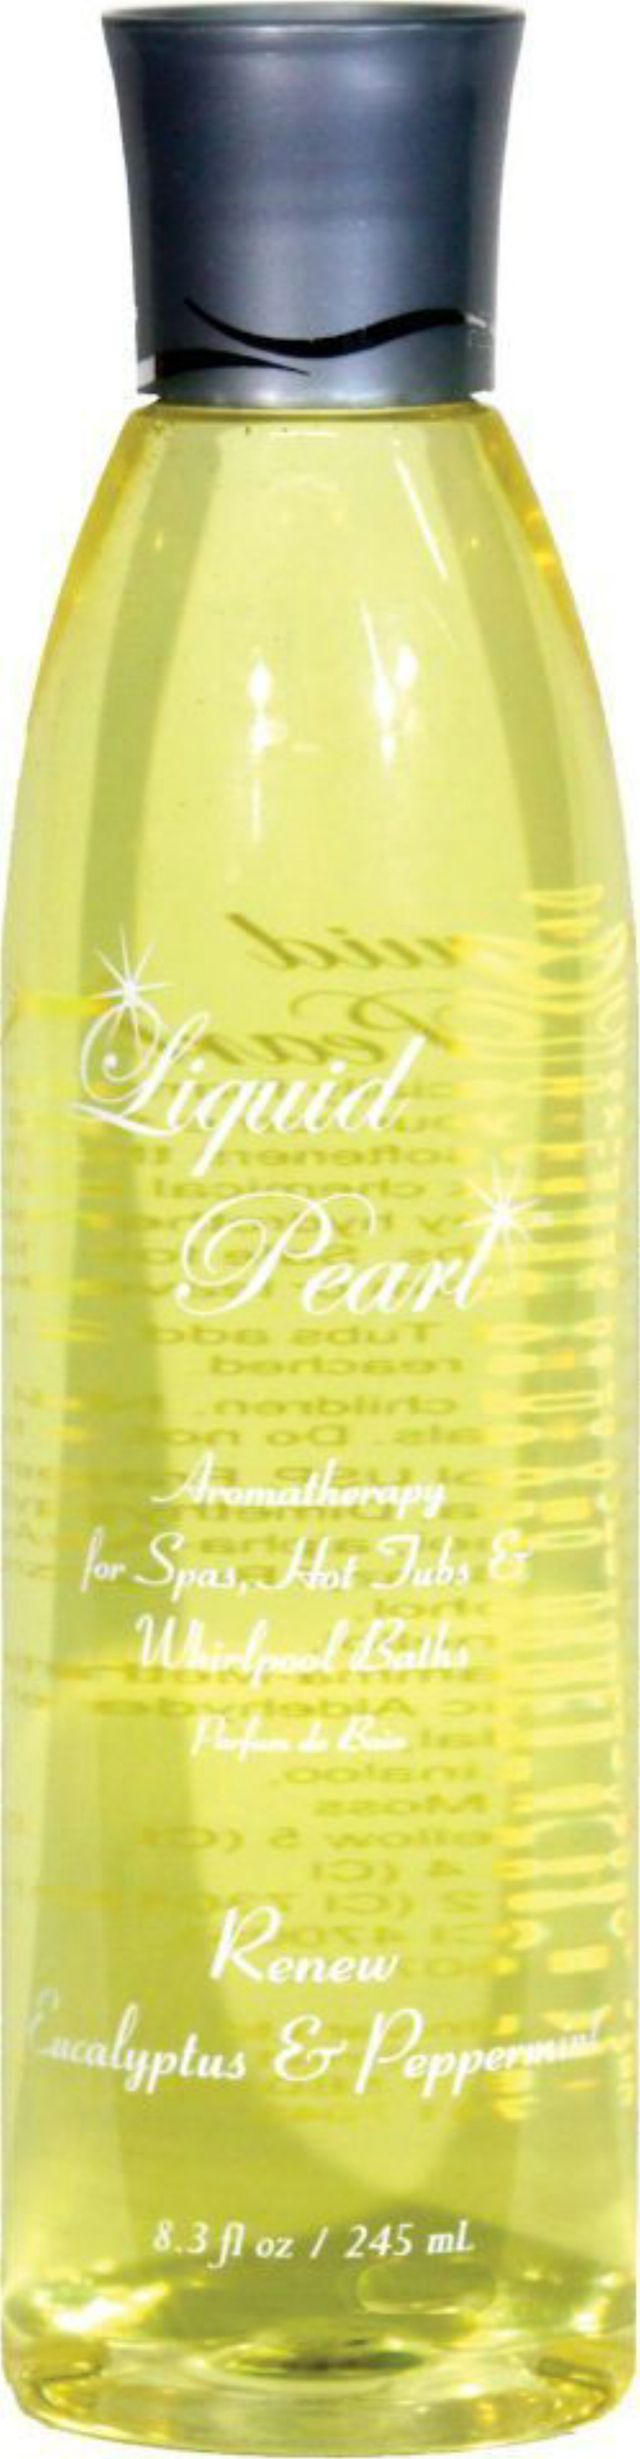 InSPAration Liquid Pearl Renew (Eucalyptus & mint) Spa geur 245ml